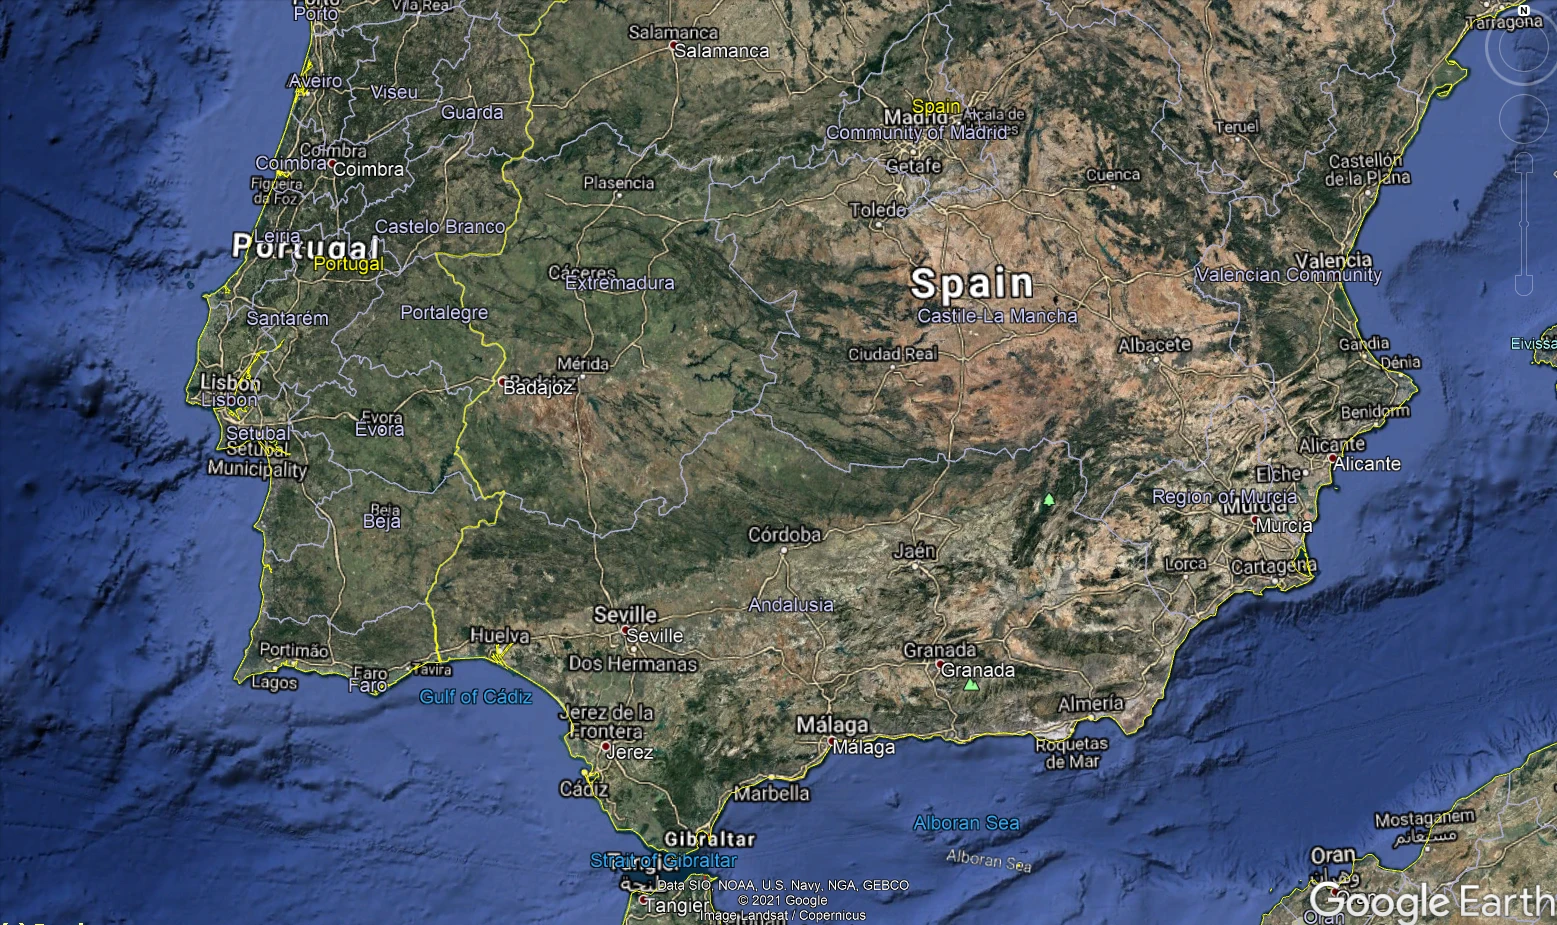 Google Hybrid overlay in Google Earth